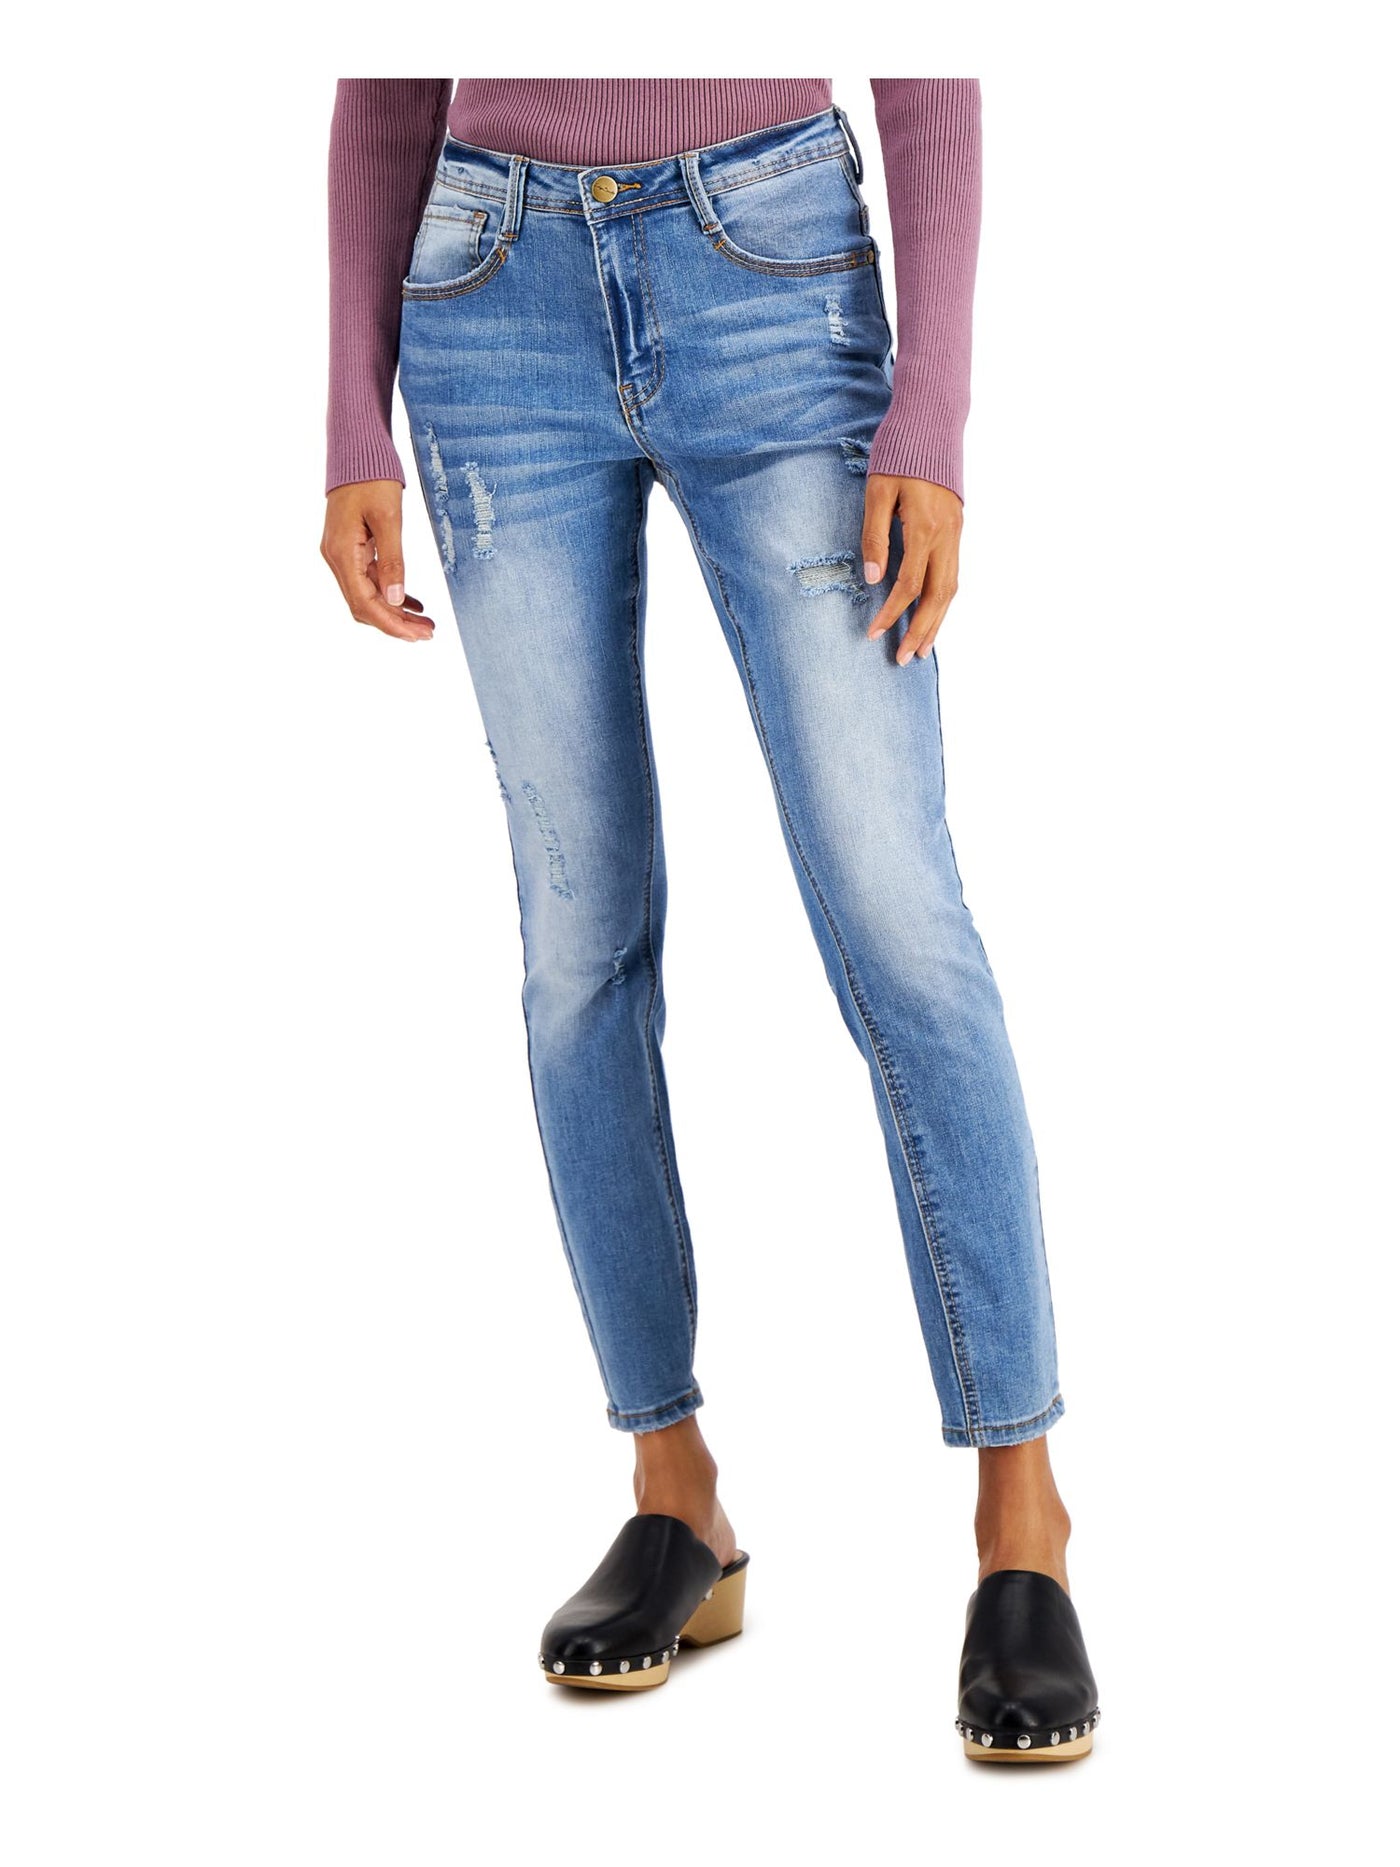 INDIGO SAINTS Womens Blue Pocketed Zippered Distressed Skinny Jeans 30